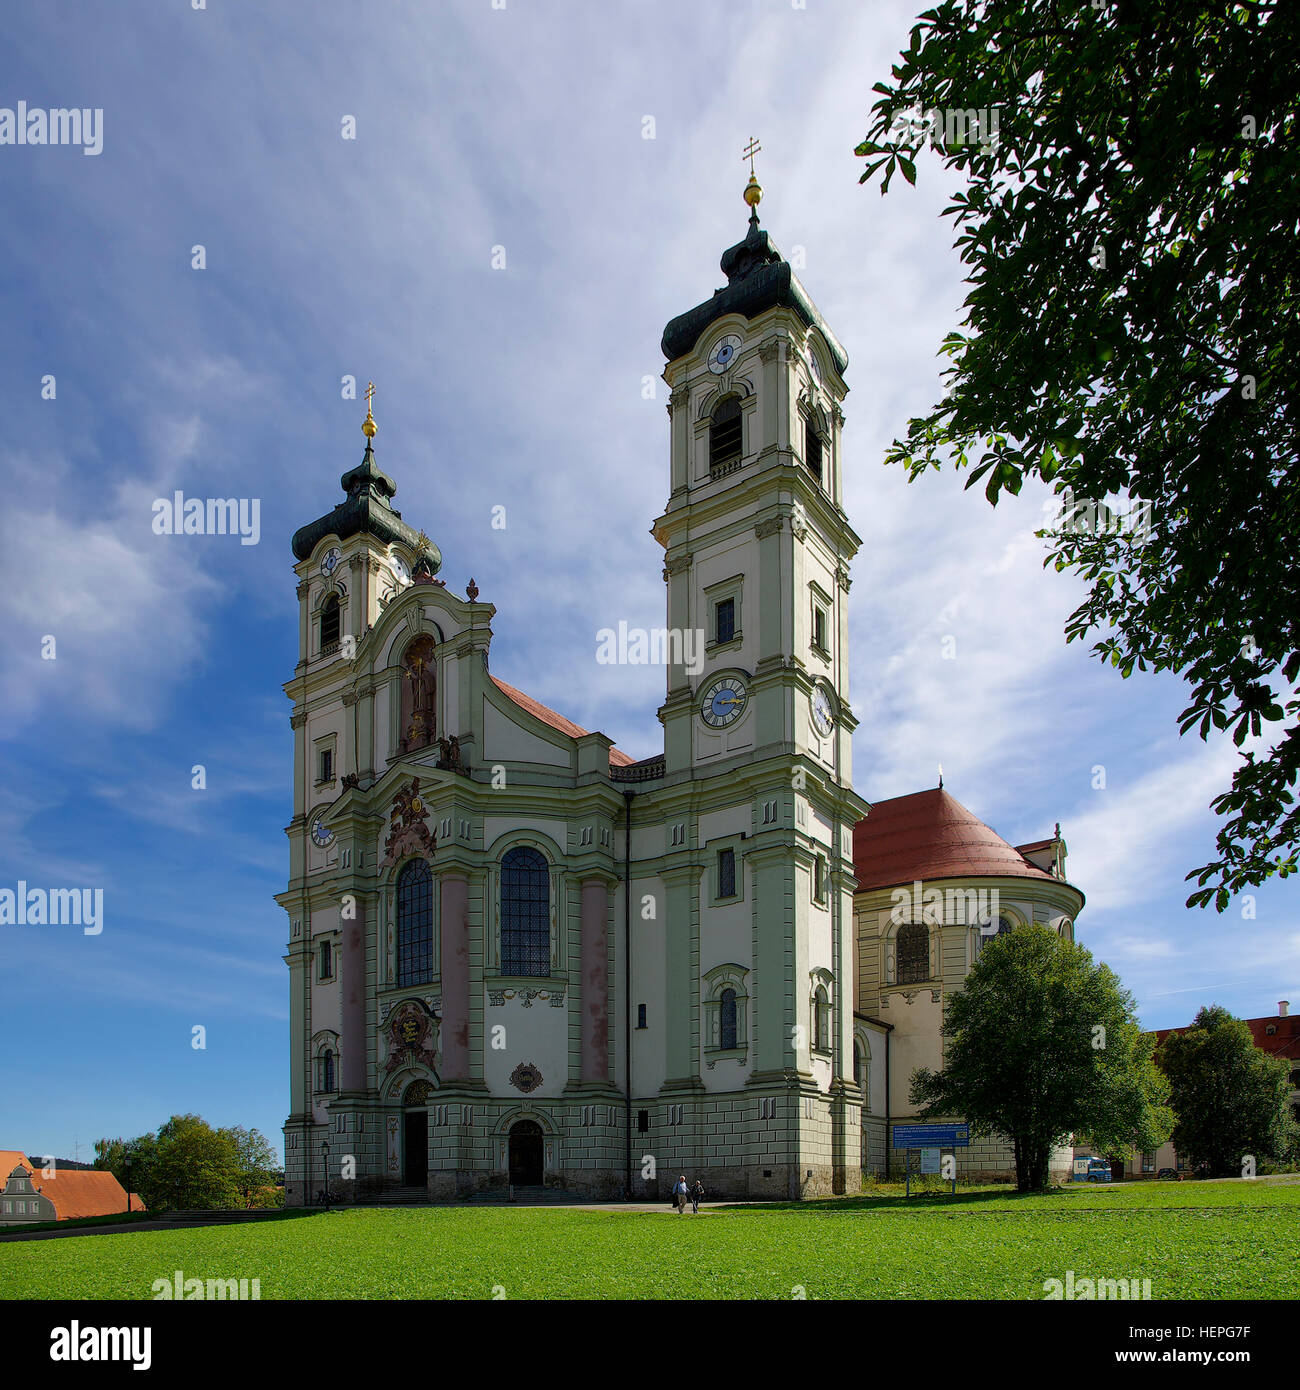 Basilica of St. Alexander and Theodor in Ottobeuren, Bavaria, Germany. Stock Photo